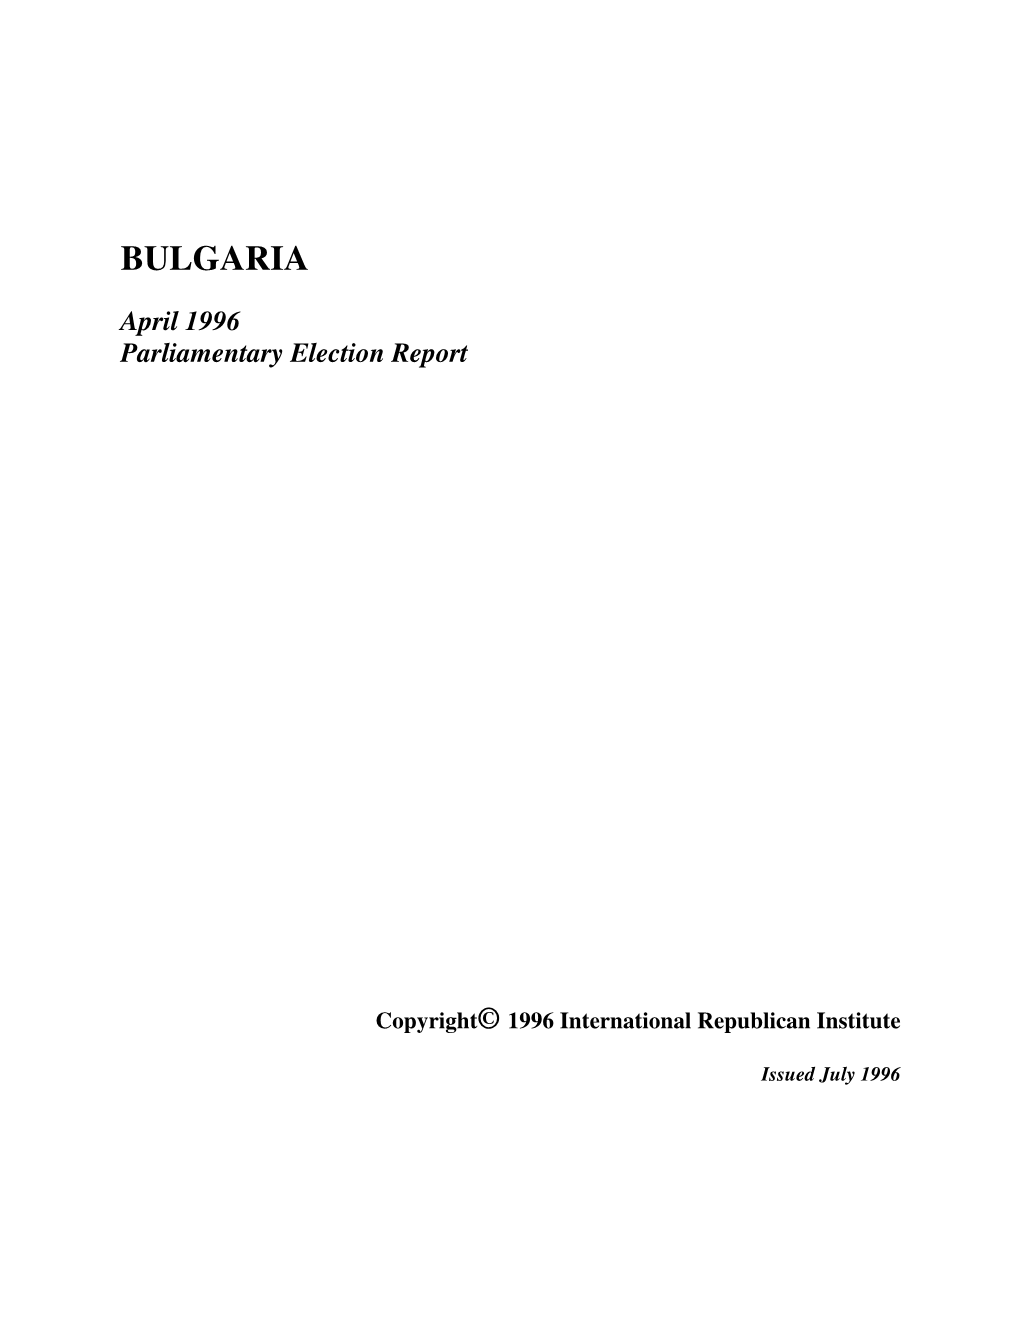 Bulgaria's 1996 Parliamentary Elections